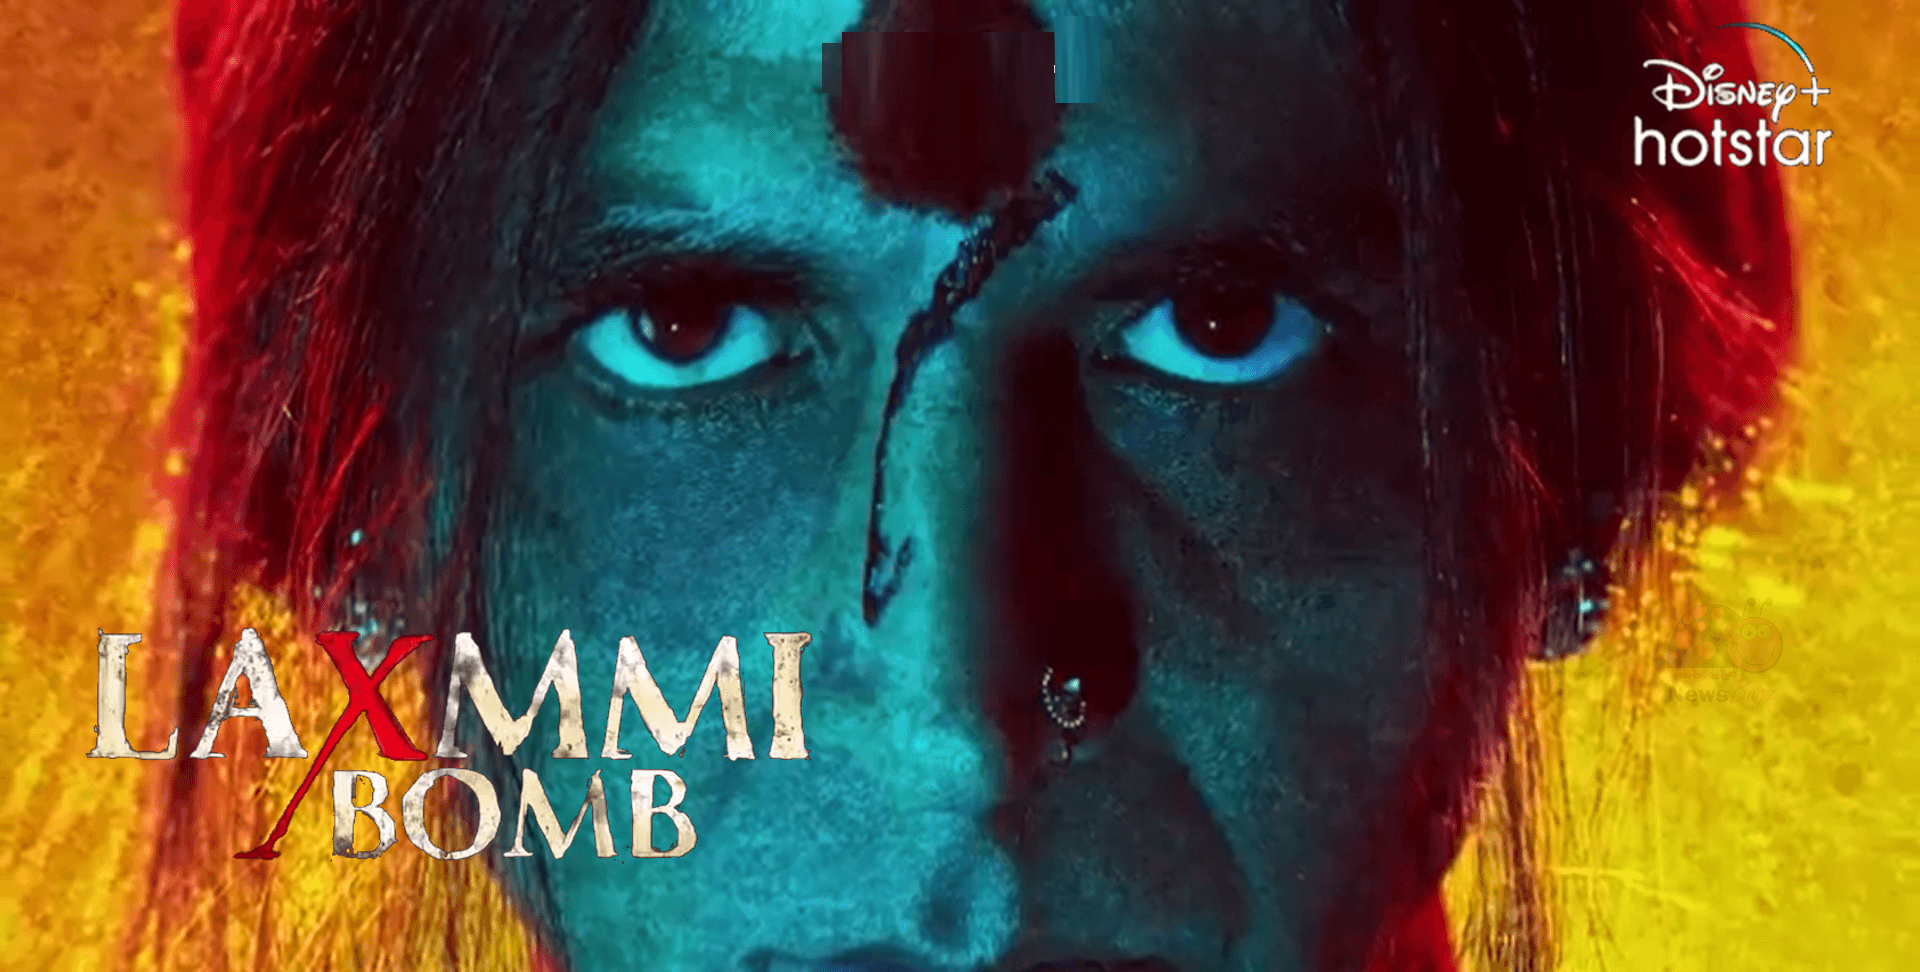 laxmmi bomb movie online